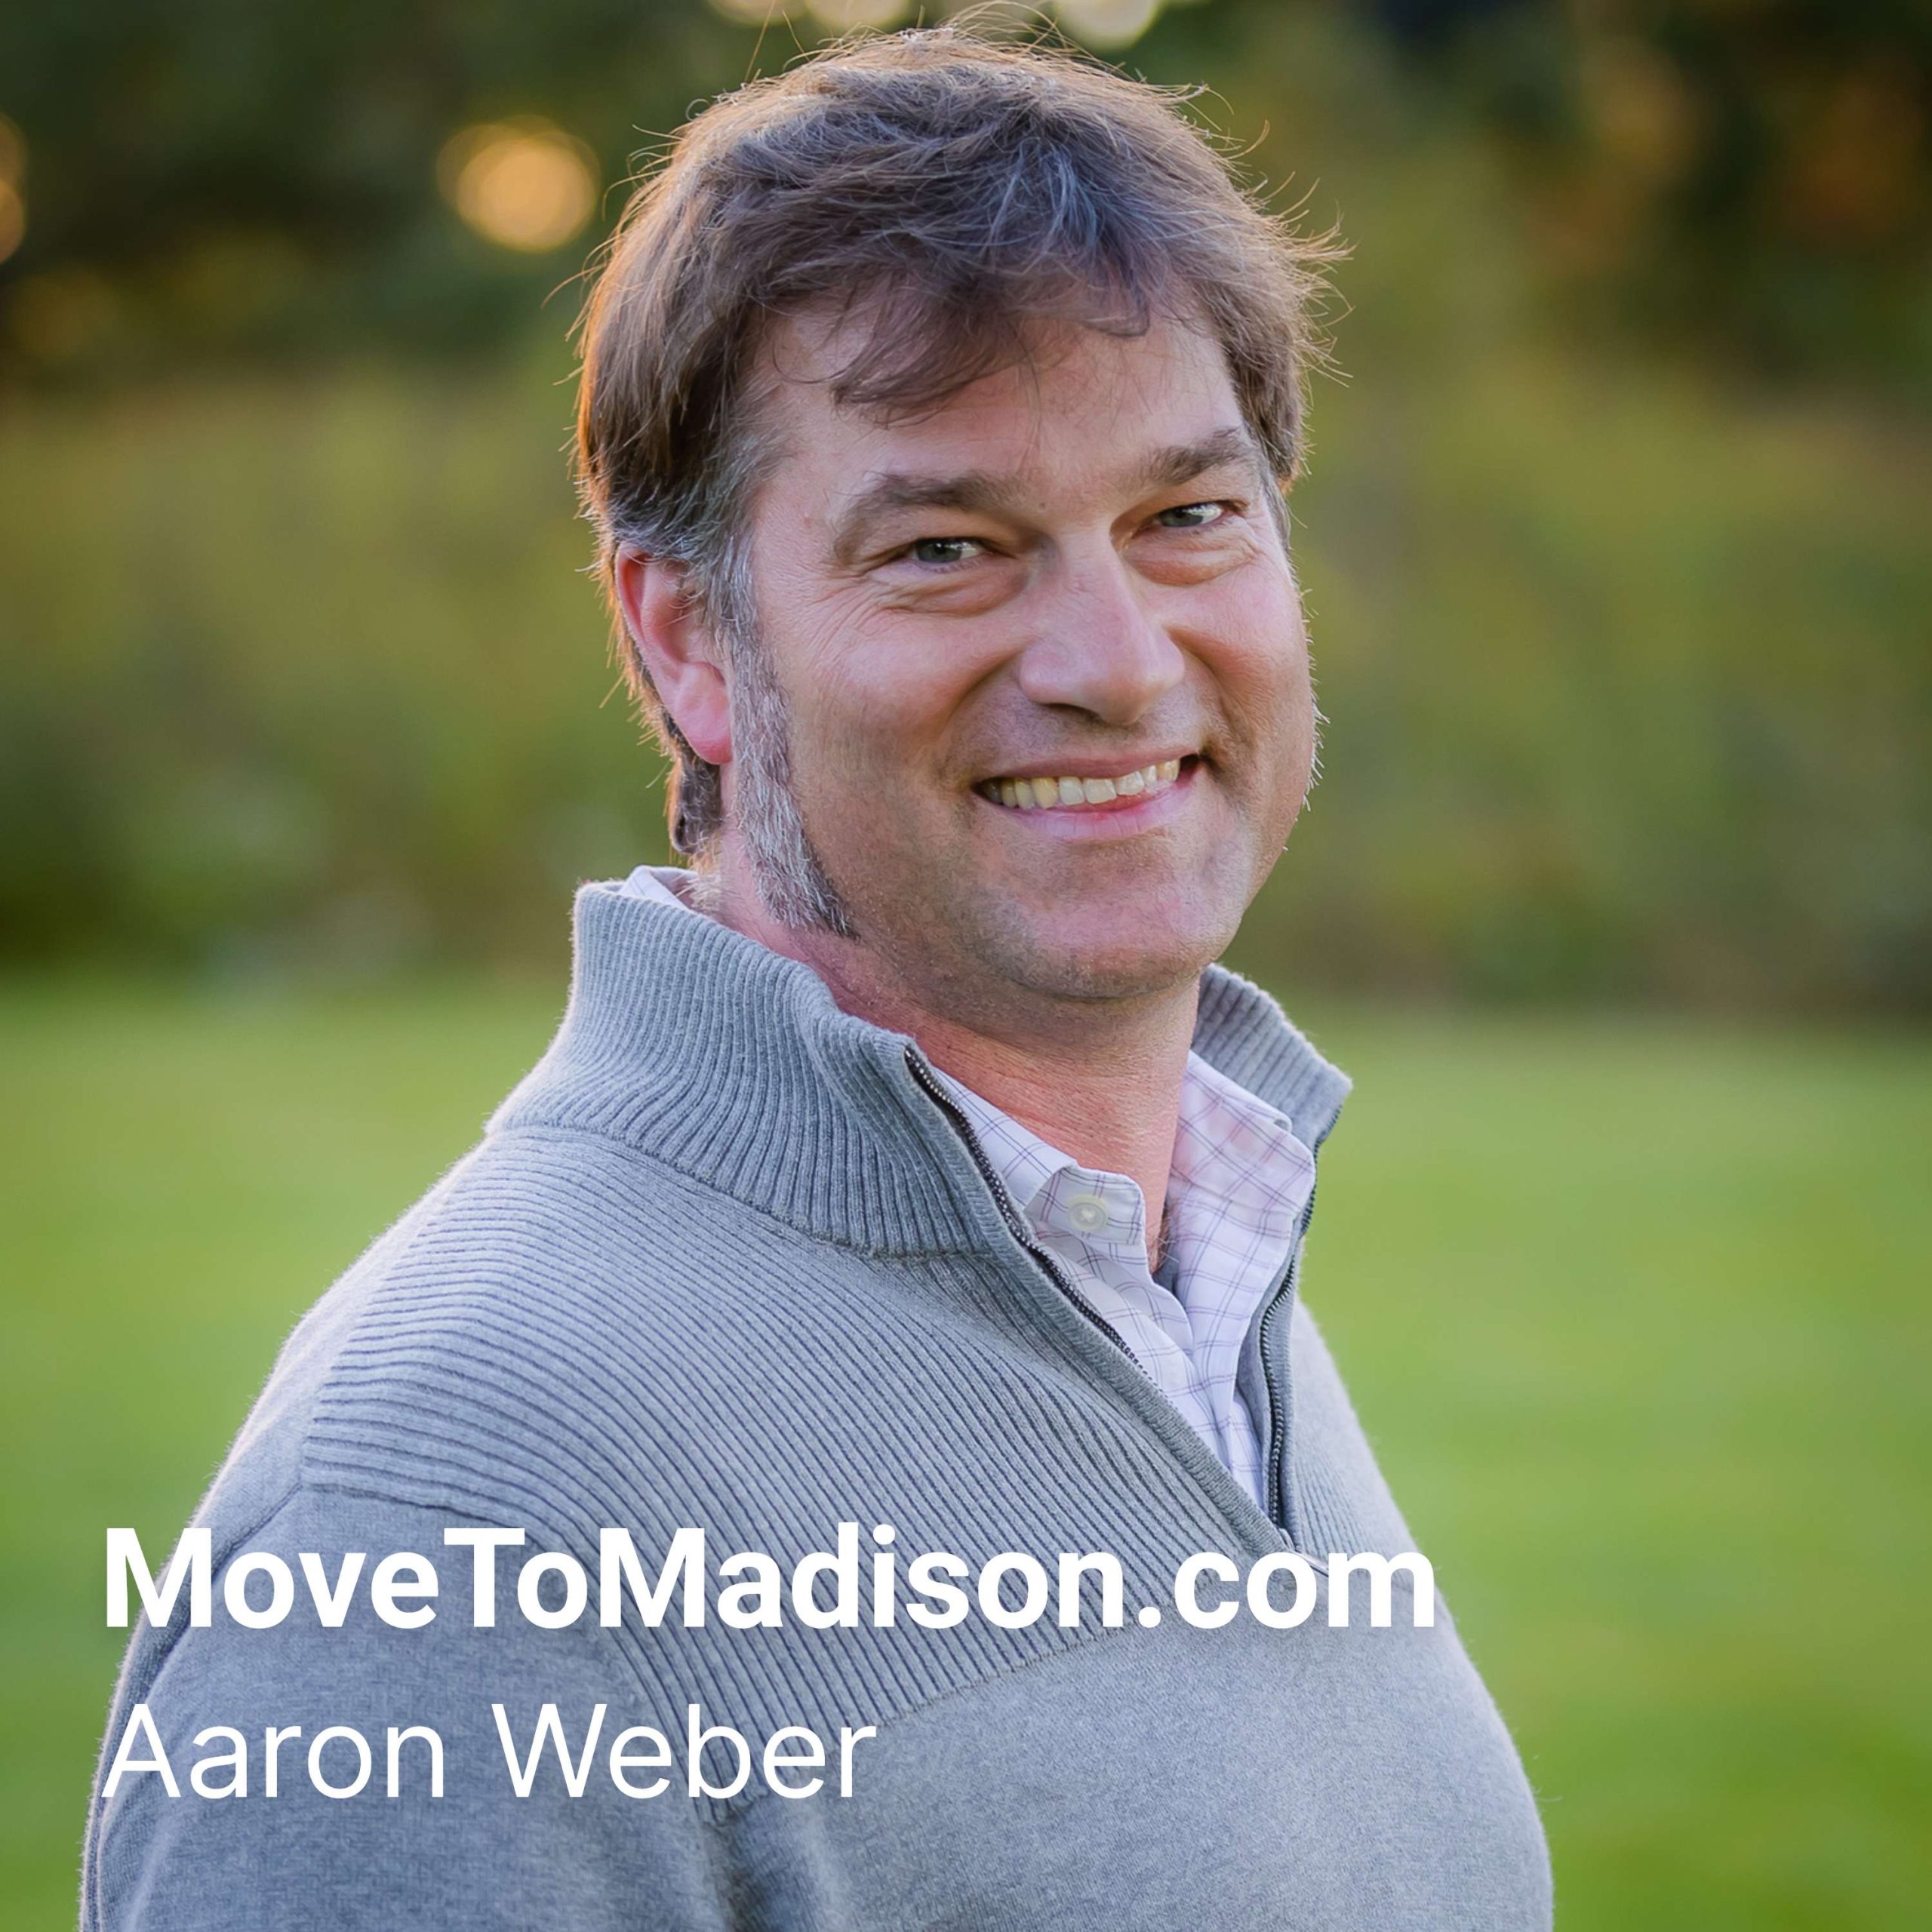 Aaron Weber of MoveToMadison.com